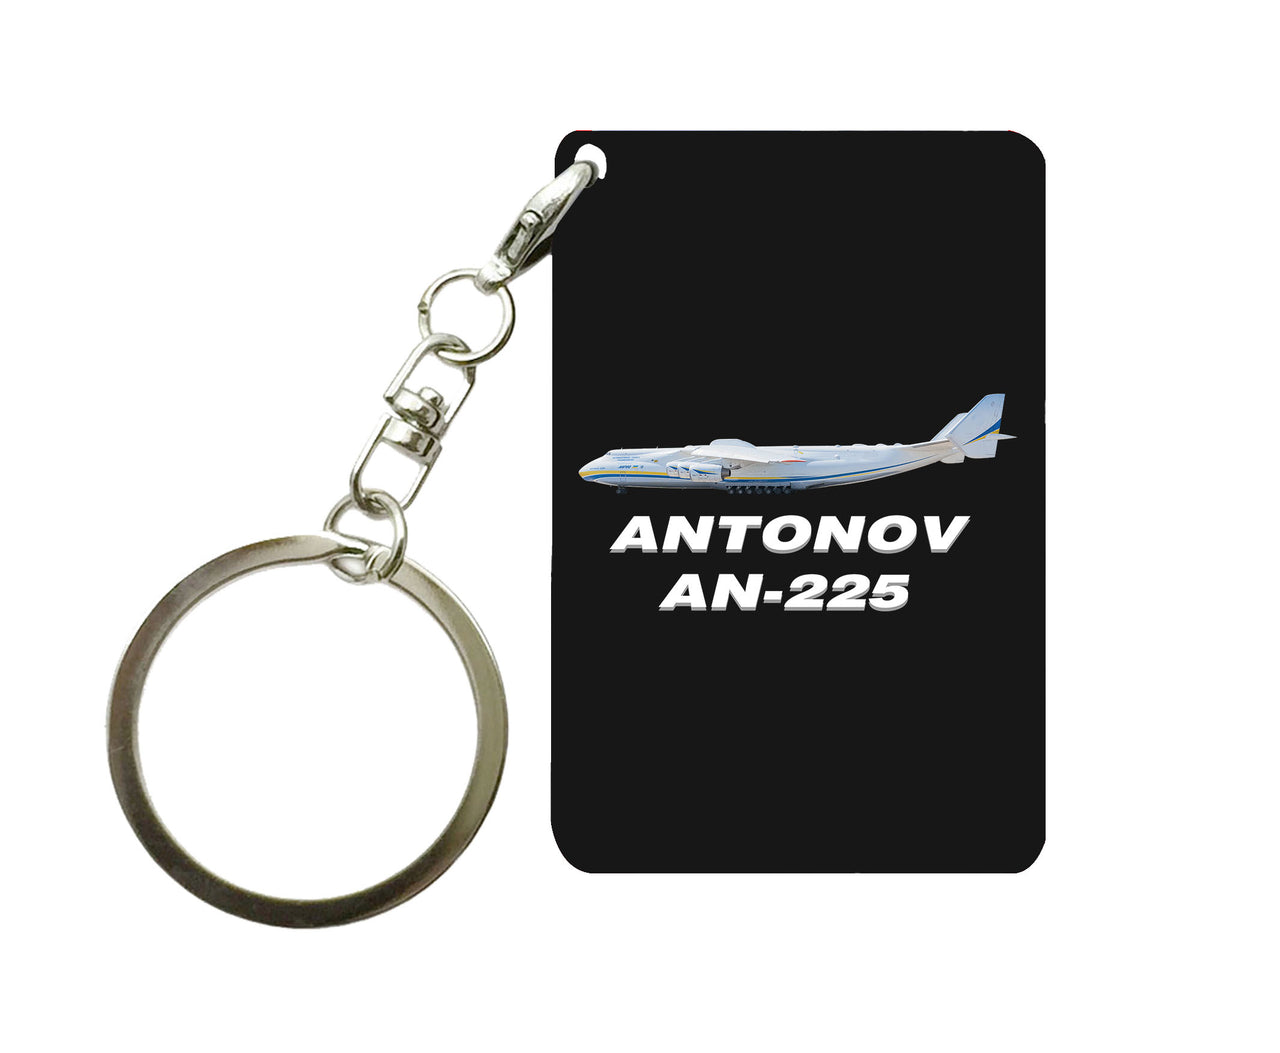 The Antonov AN-225 Designed Key Chains